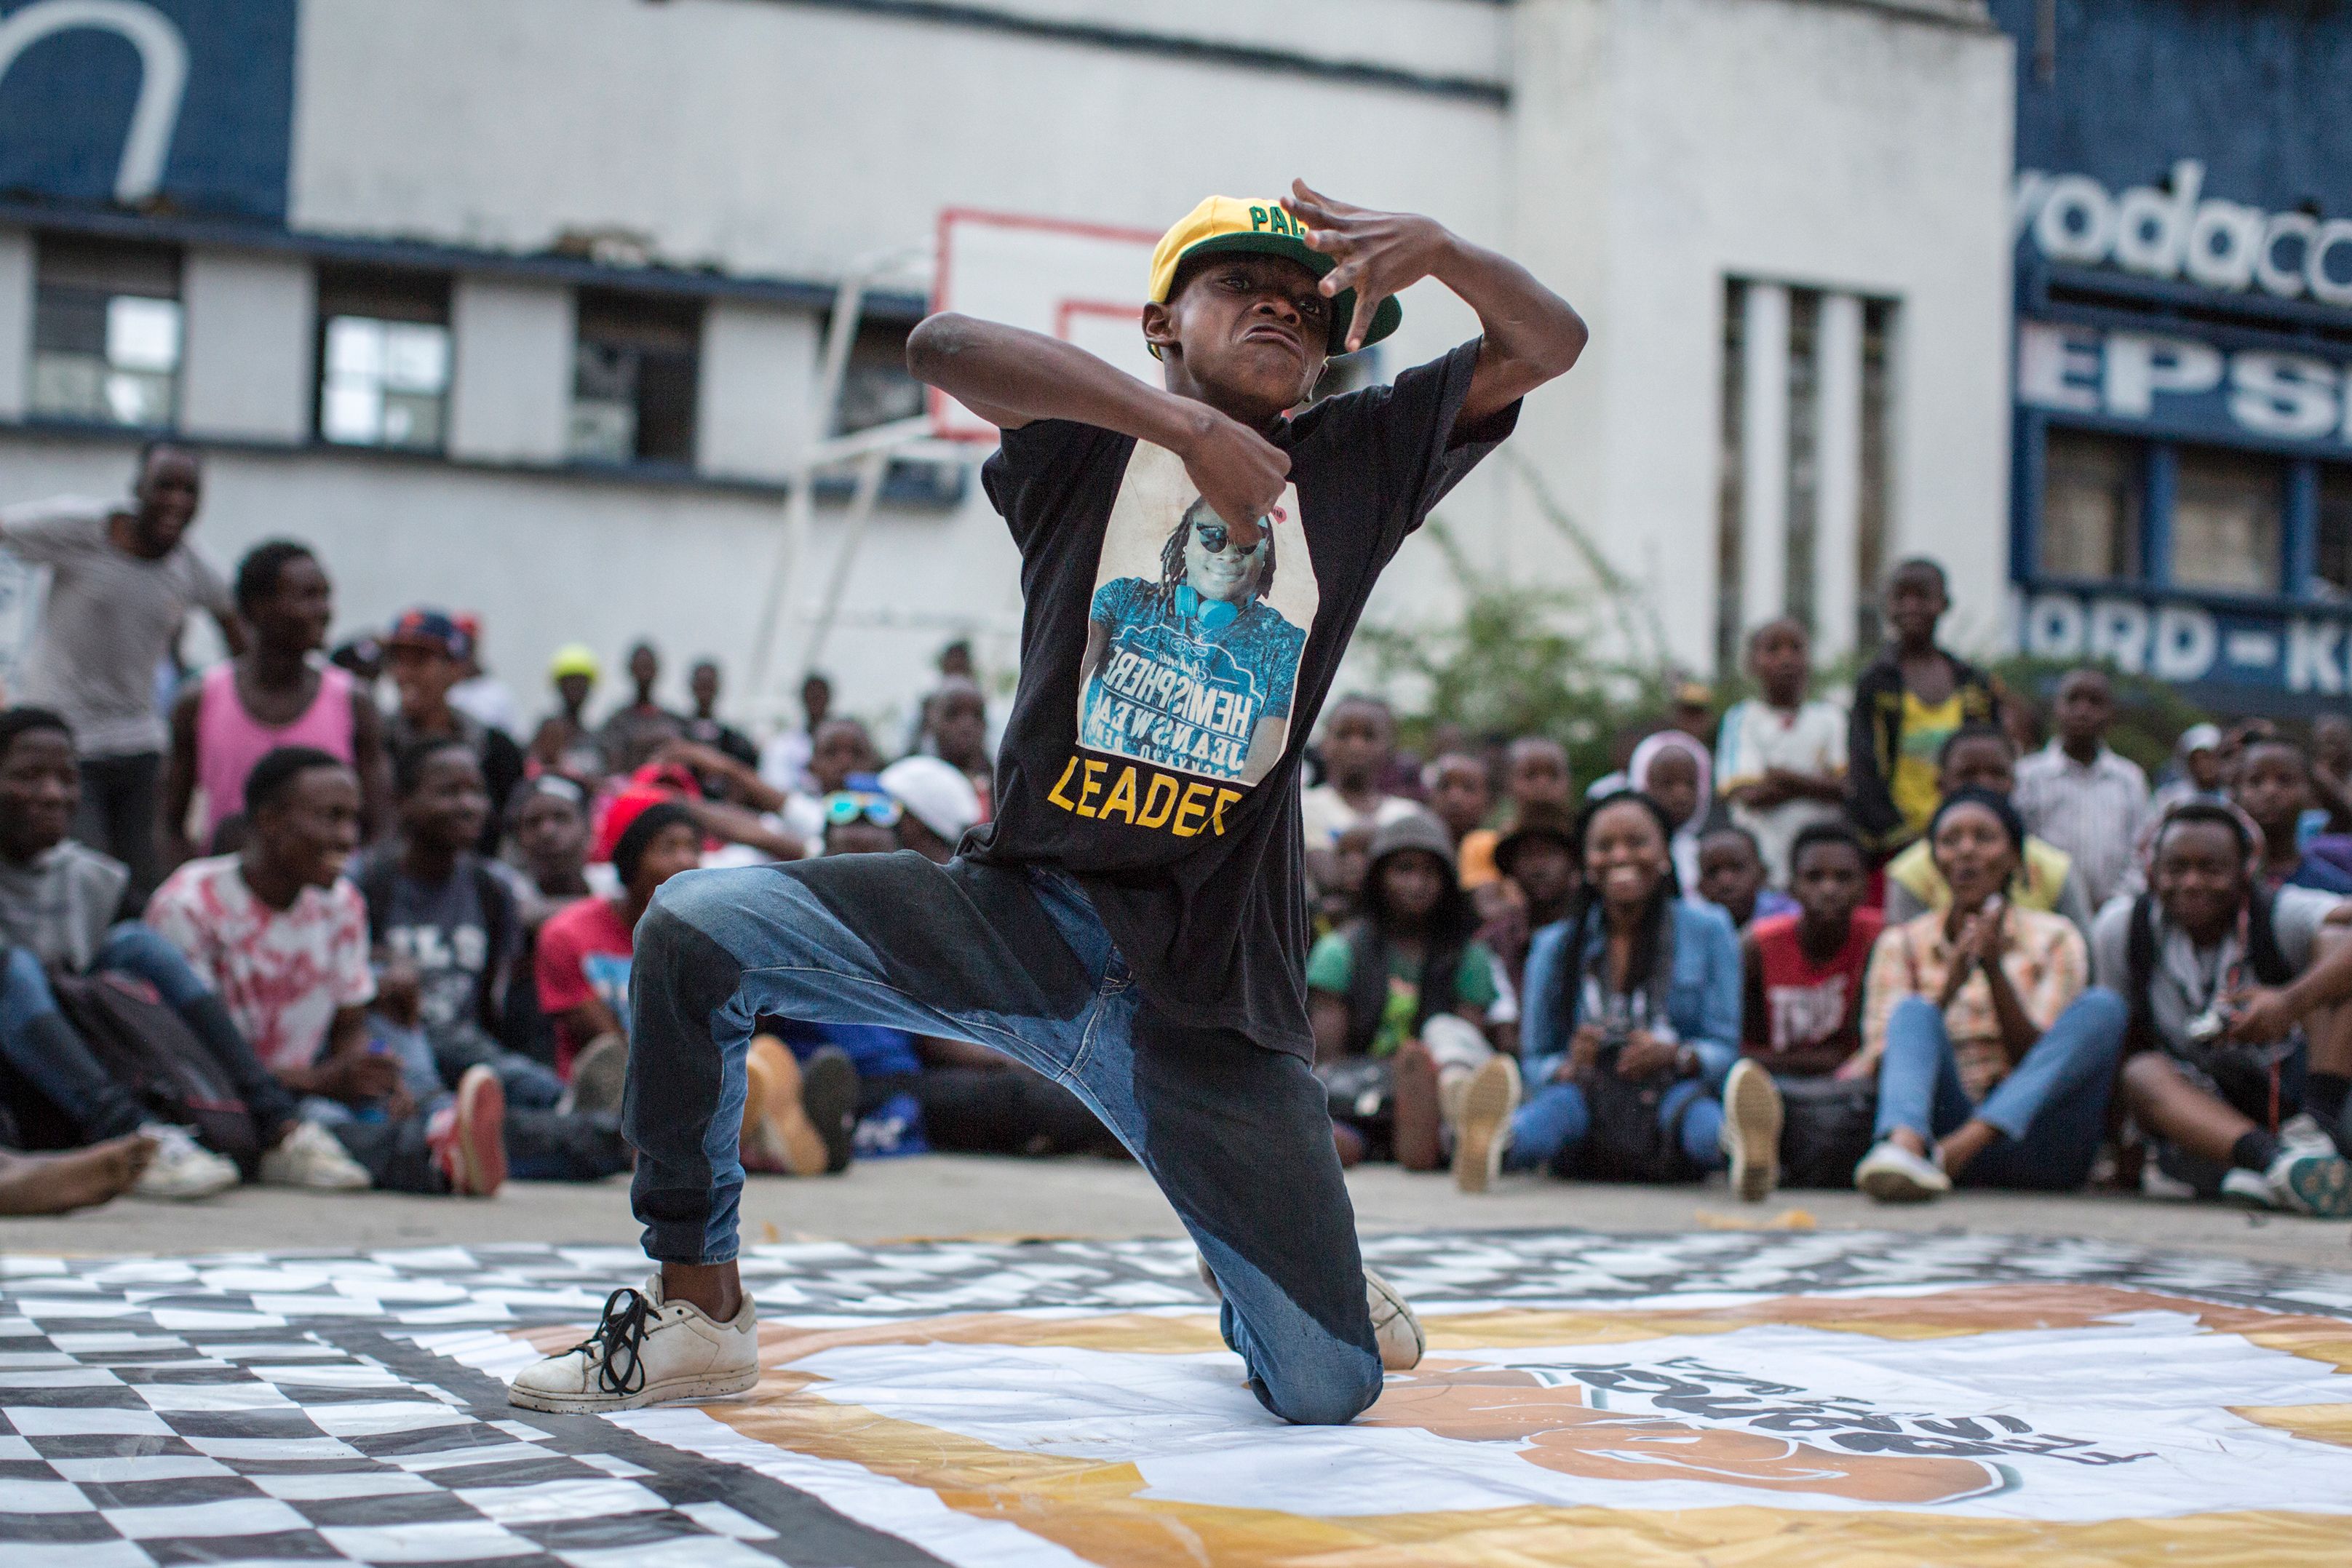 DRCONGO-CULTURE-DANCE